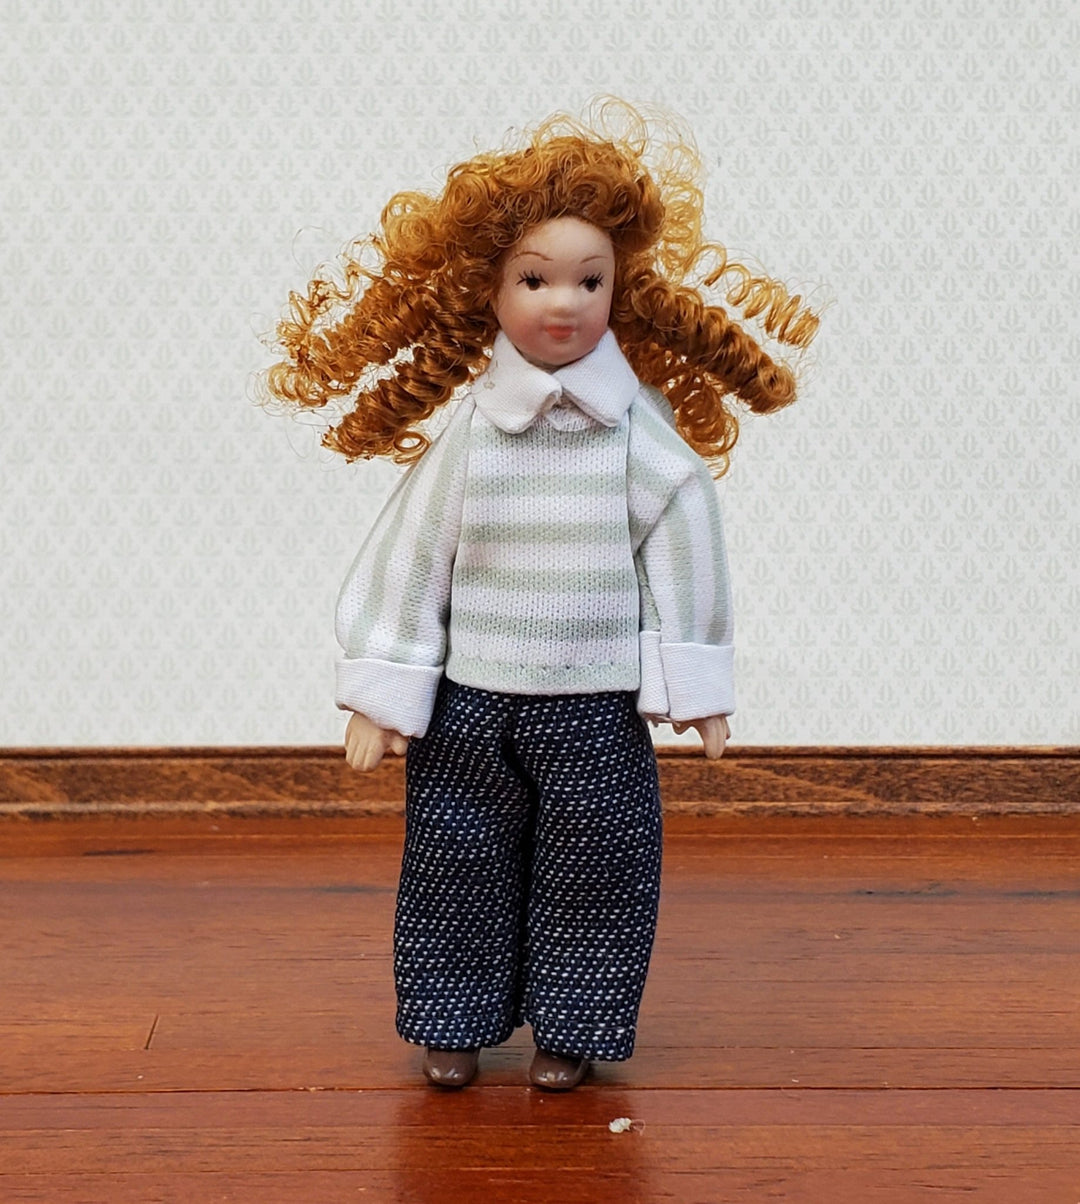 Dollhouse Girl Doll Modern Curly Hair Porcelain Poseable 1:12 Scale Miniature - Miniature Crush